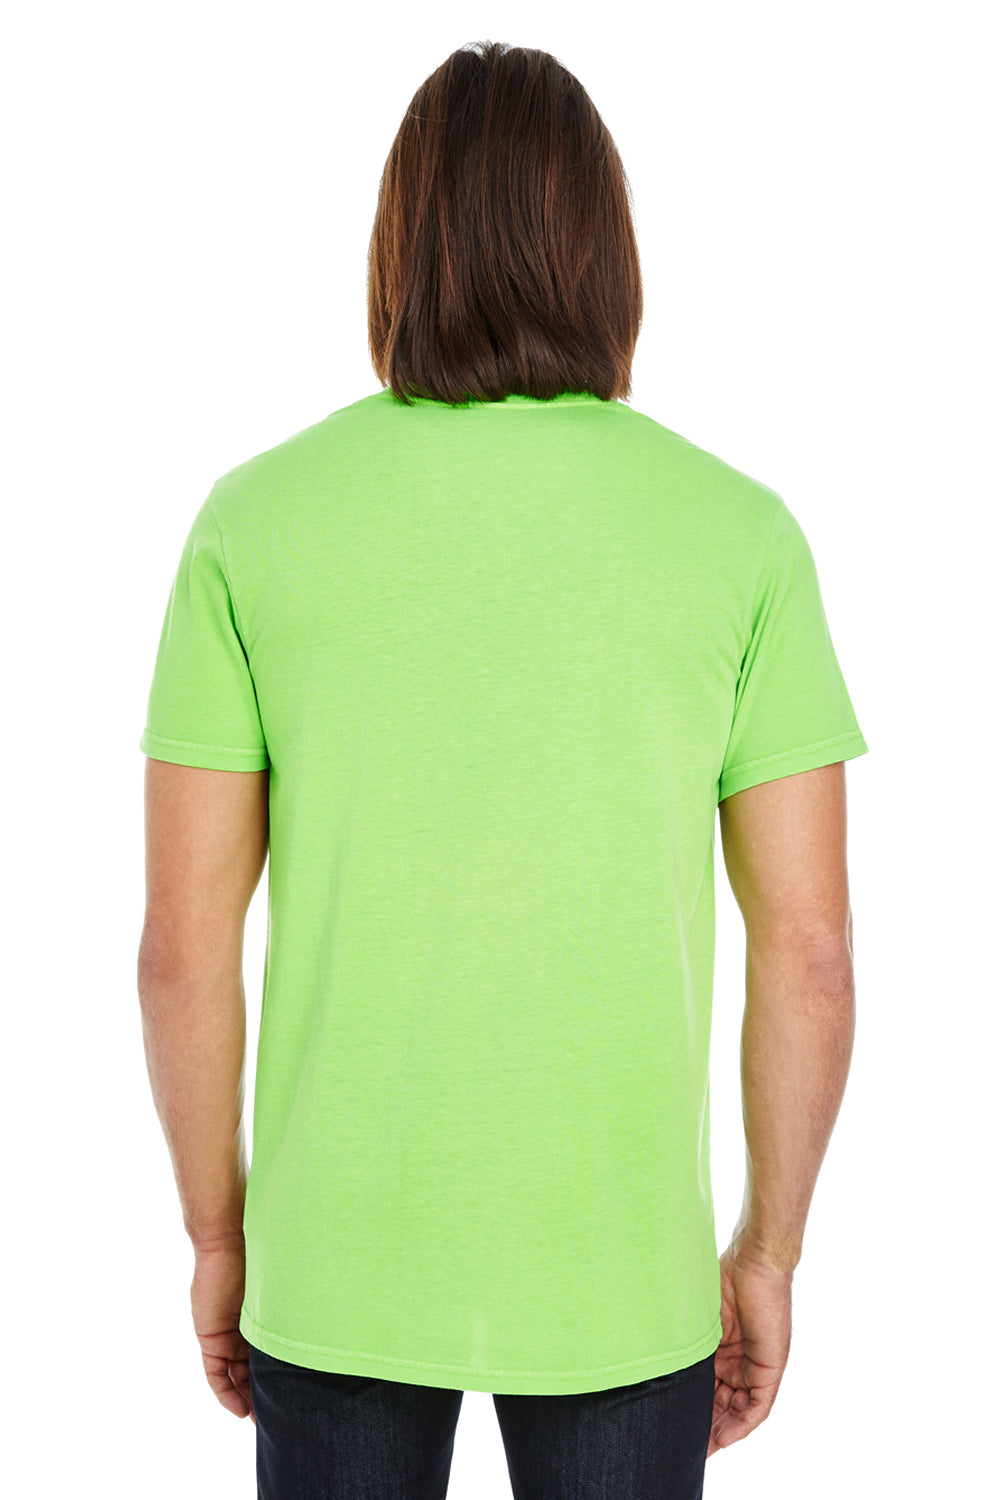 Threadfast Apparel 130A Mens Short Sleeve Crewneck T-Shirt Lime Green Back